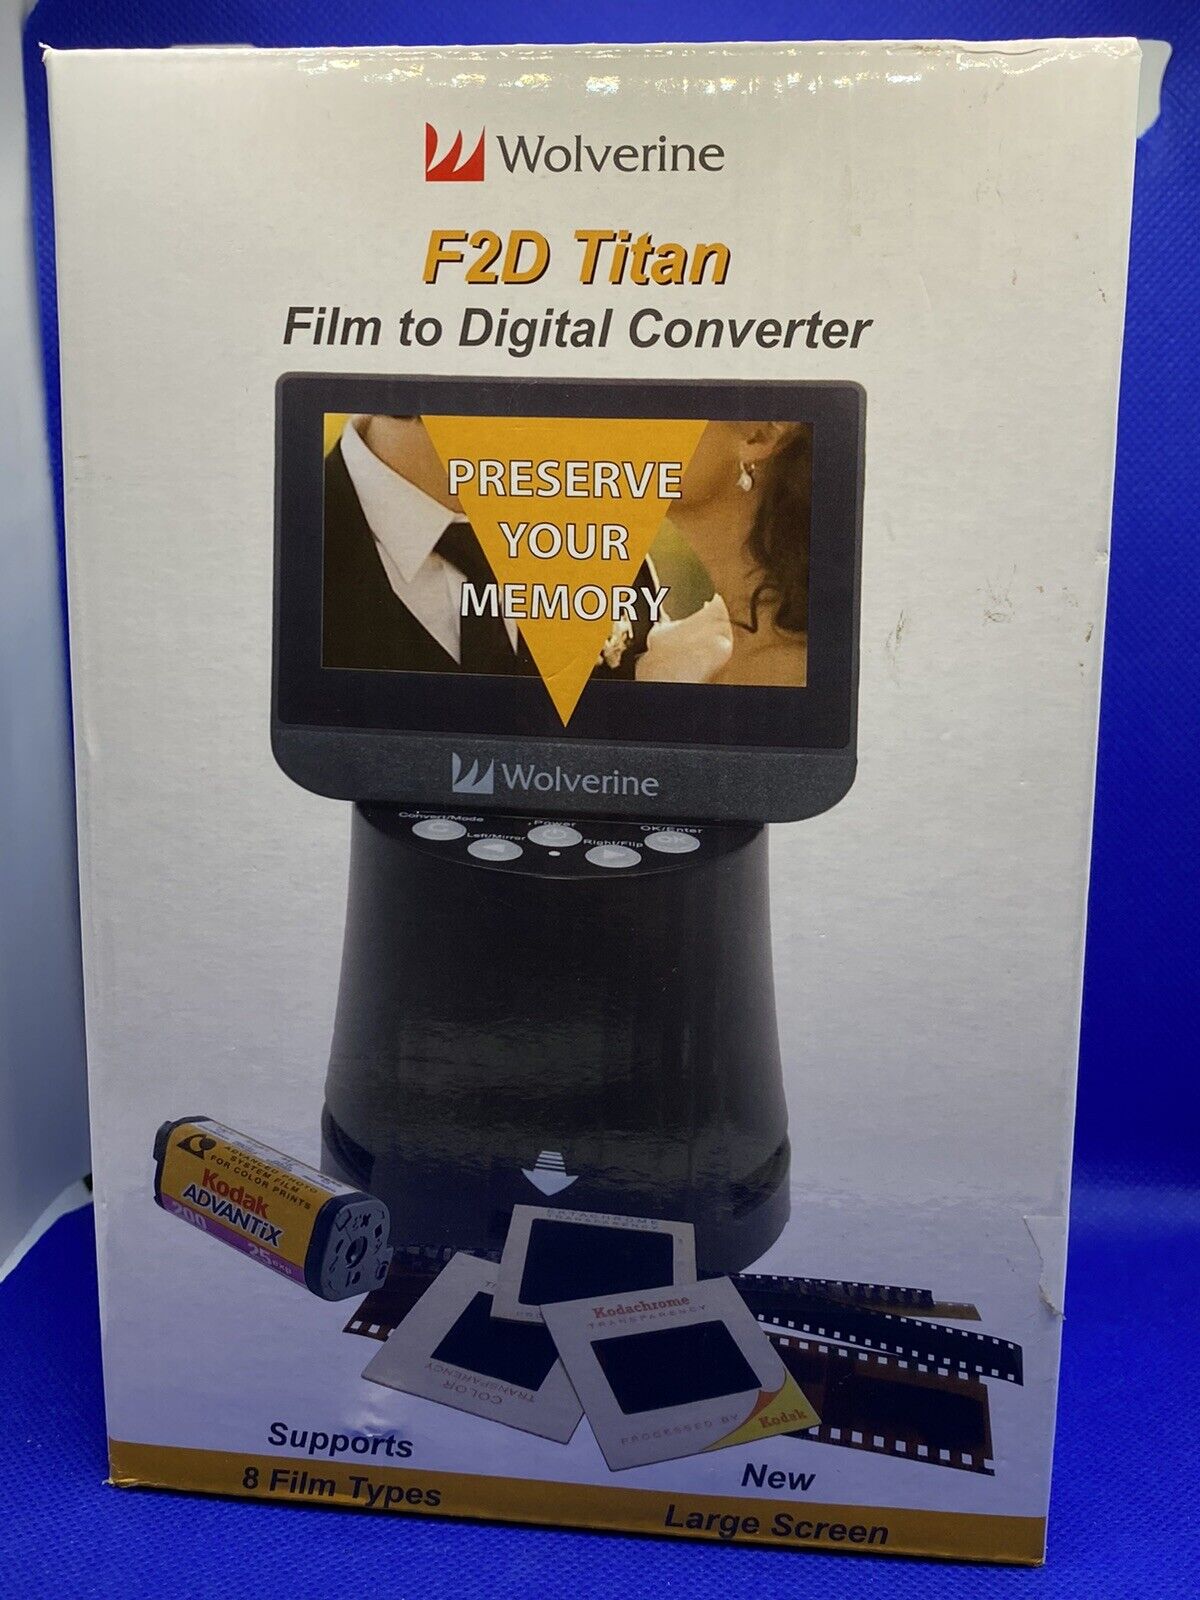 WOLVERINE F2D TITAN CONVERTER FILM TO DIGITAL CONVERTER SUPPORTS 8 FILM TYPES